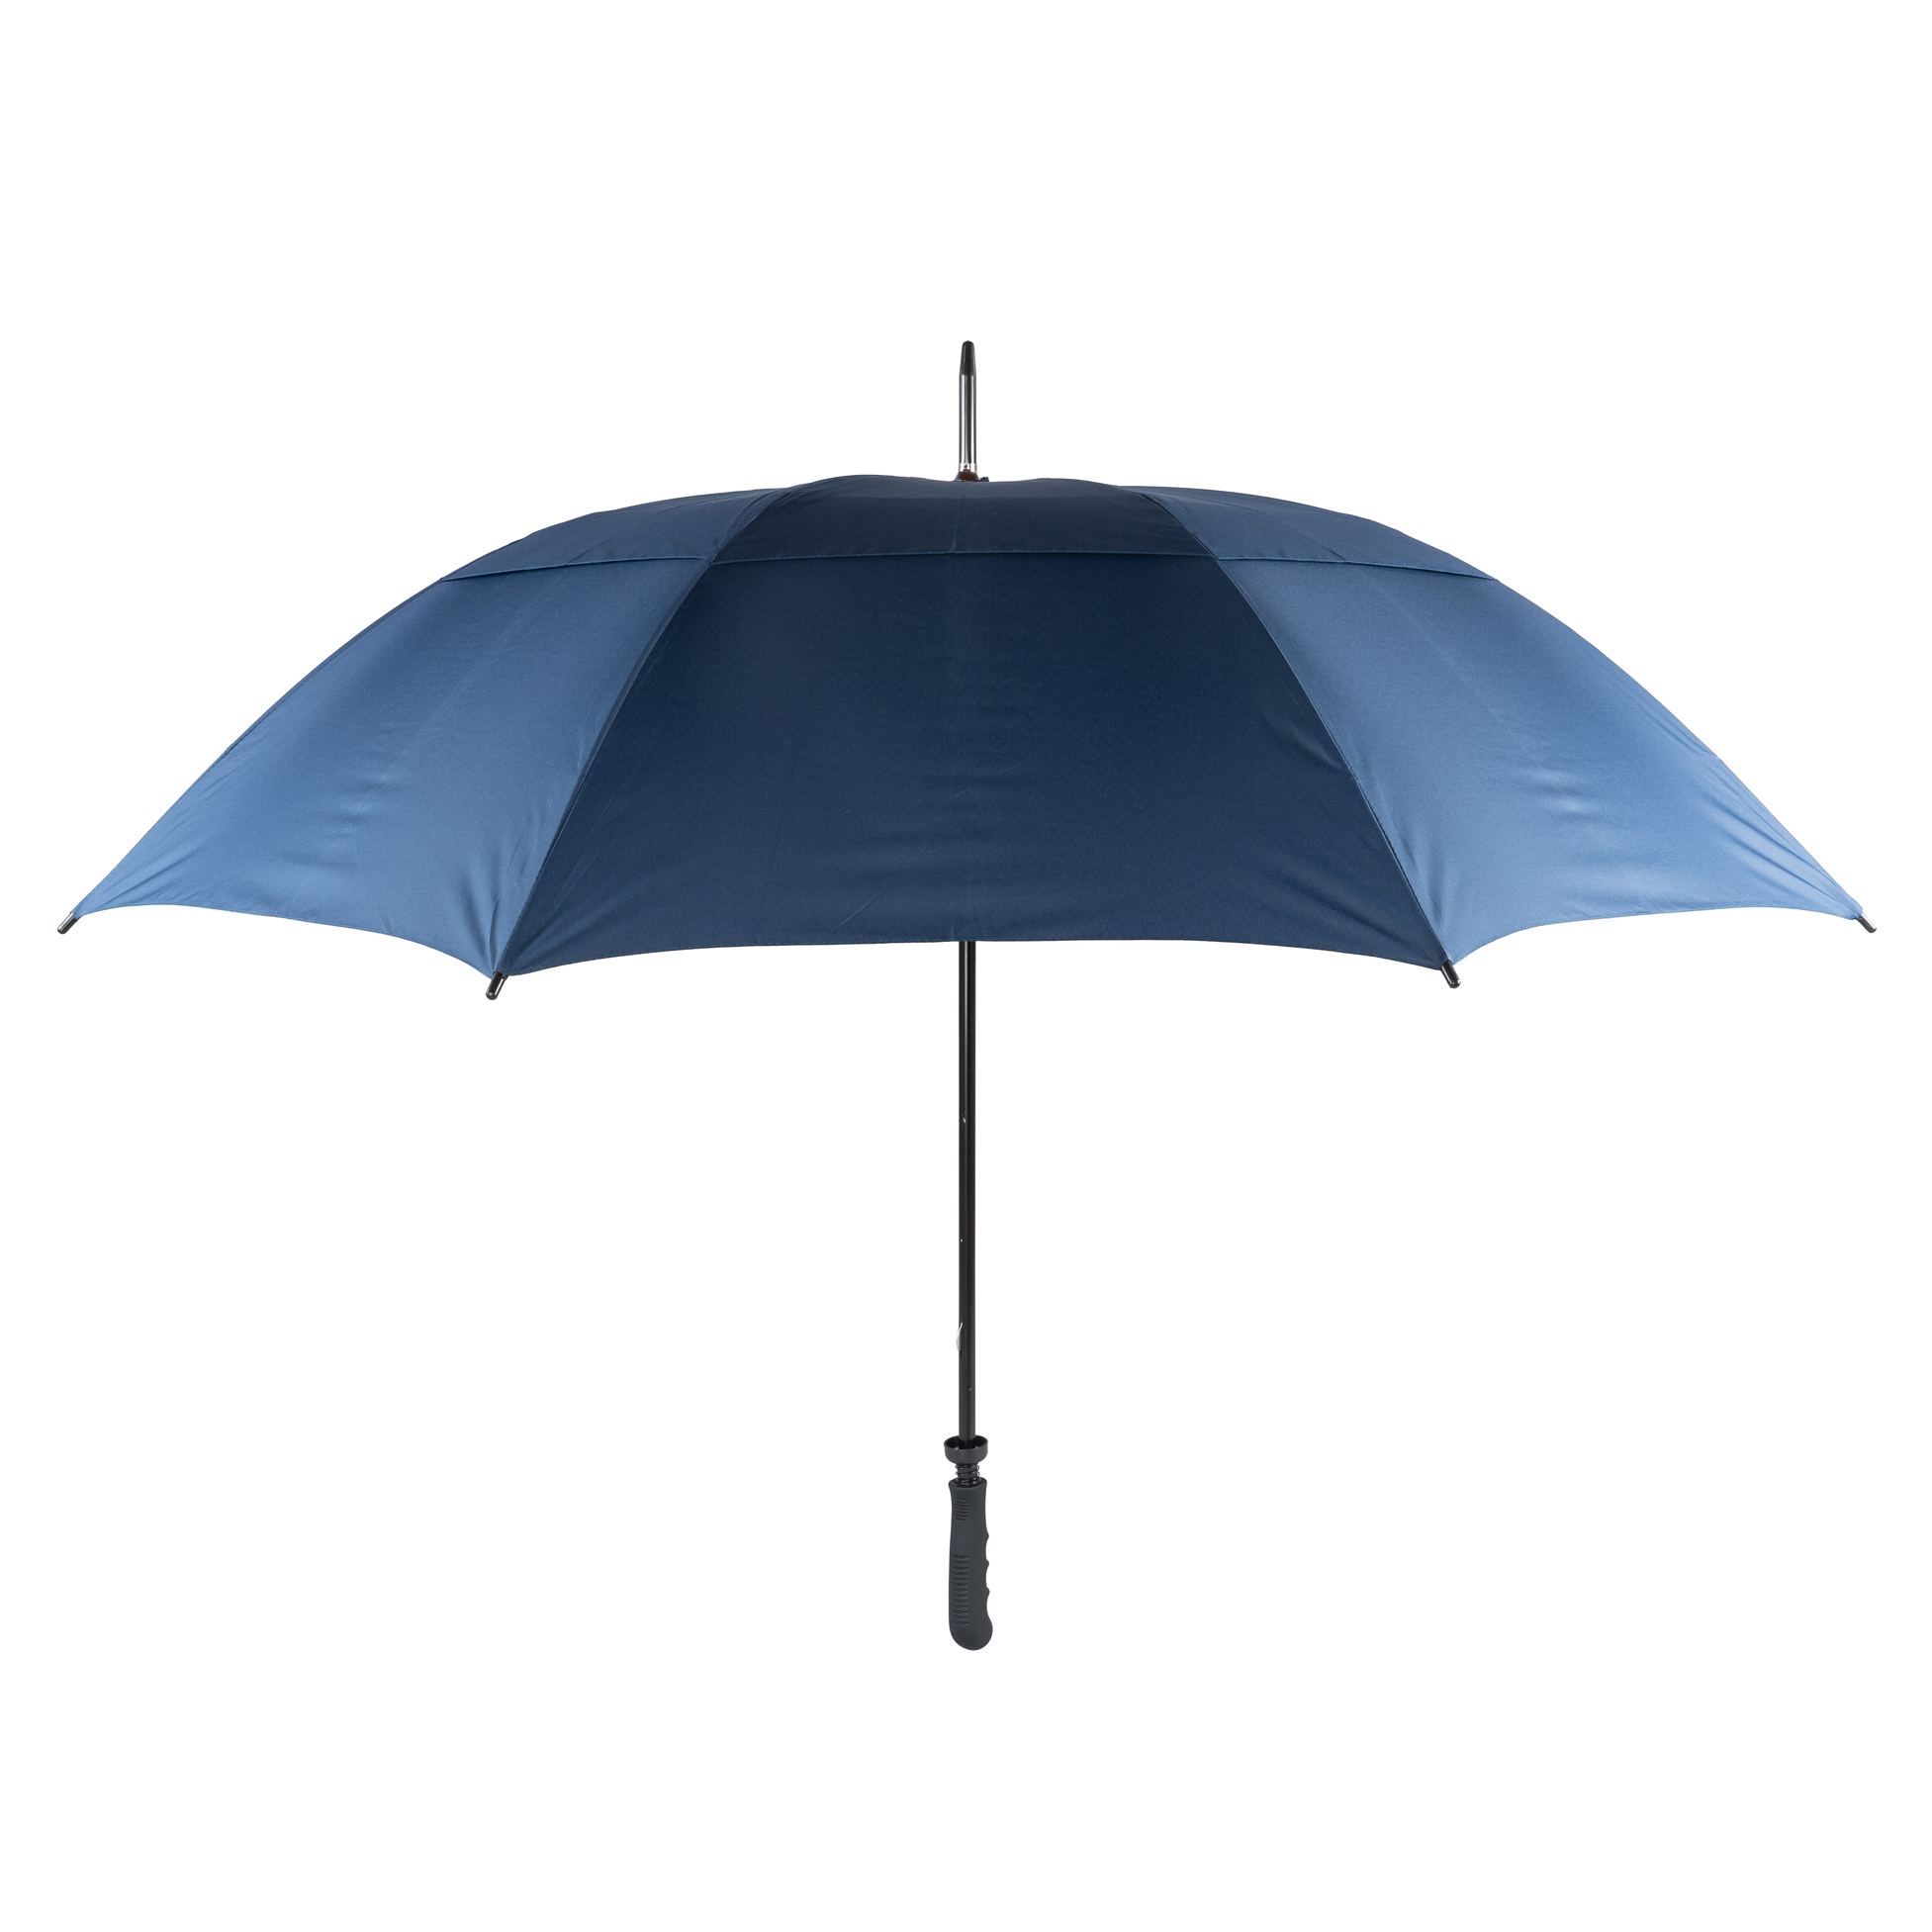 Six pack of Navy Blue Golf Umbrellas (3475P-6)